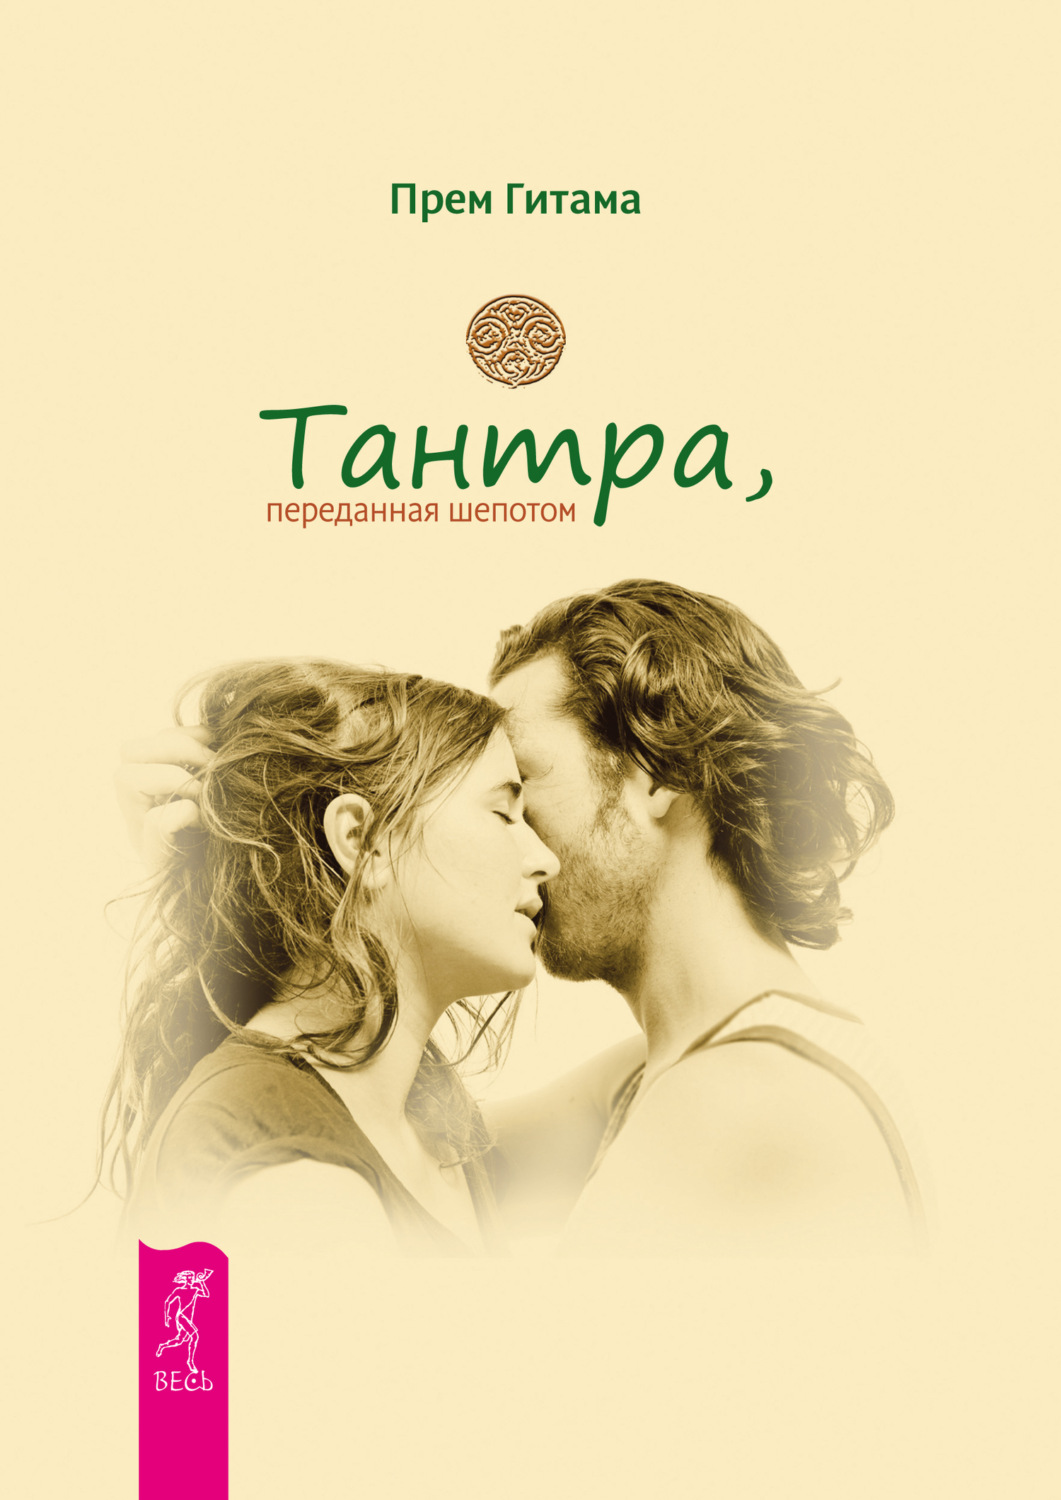 Tantra Kissing